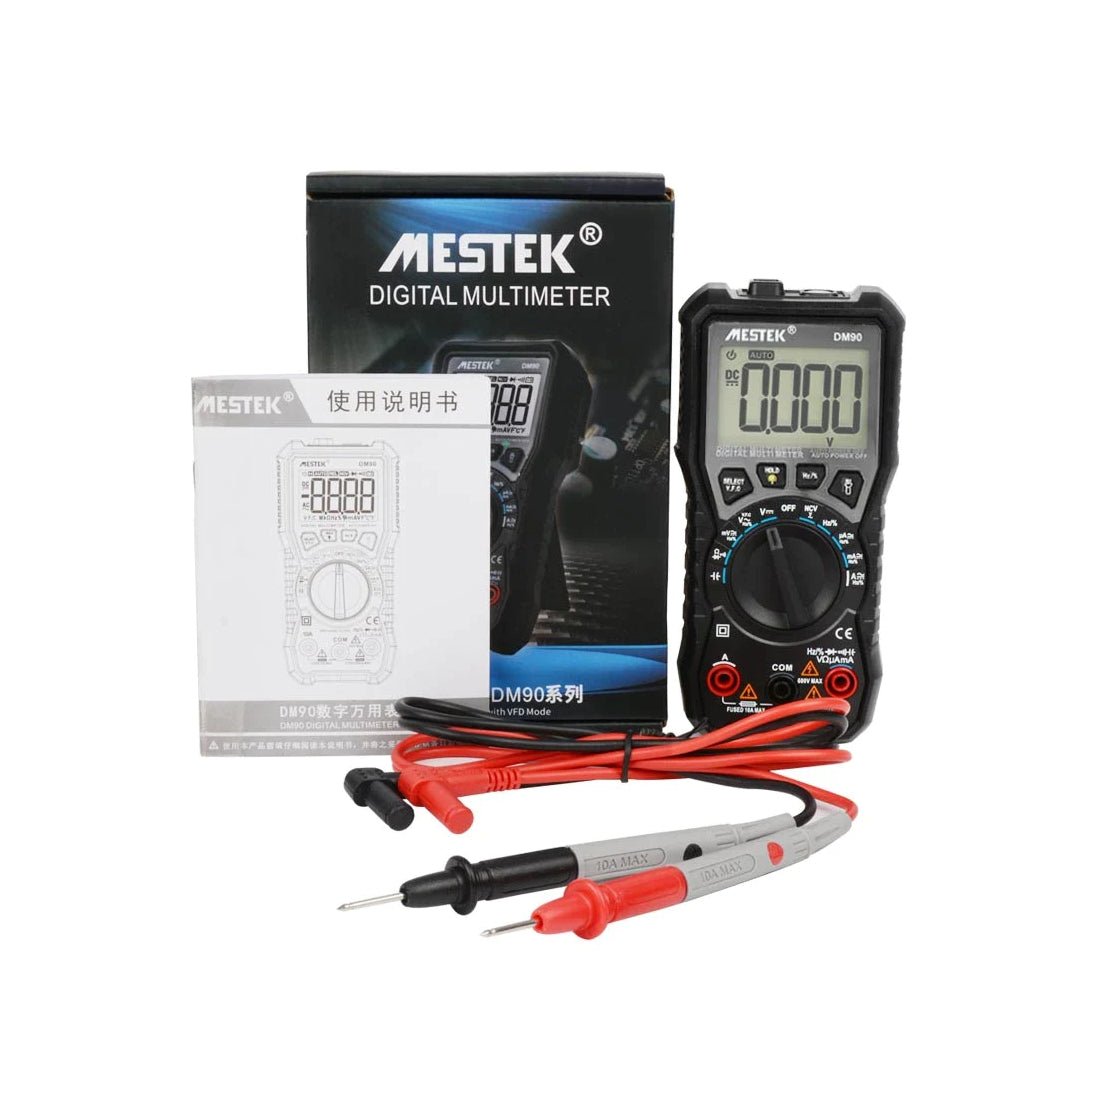 MESTEK Auto Range Digital Multimeter - DM90 - جهاز قياس - Store 974 | ستور ٩٧٤